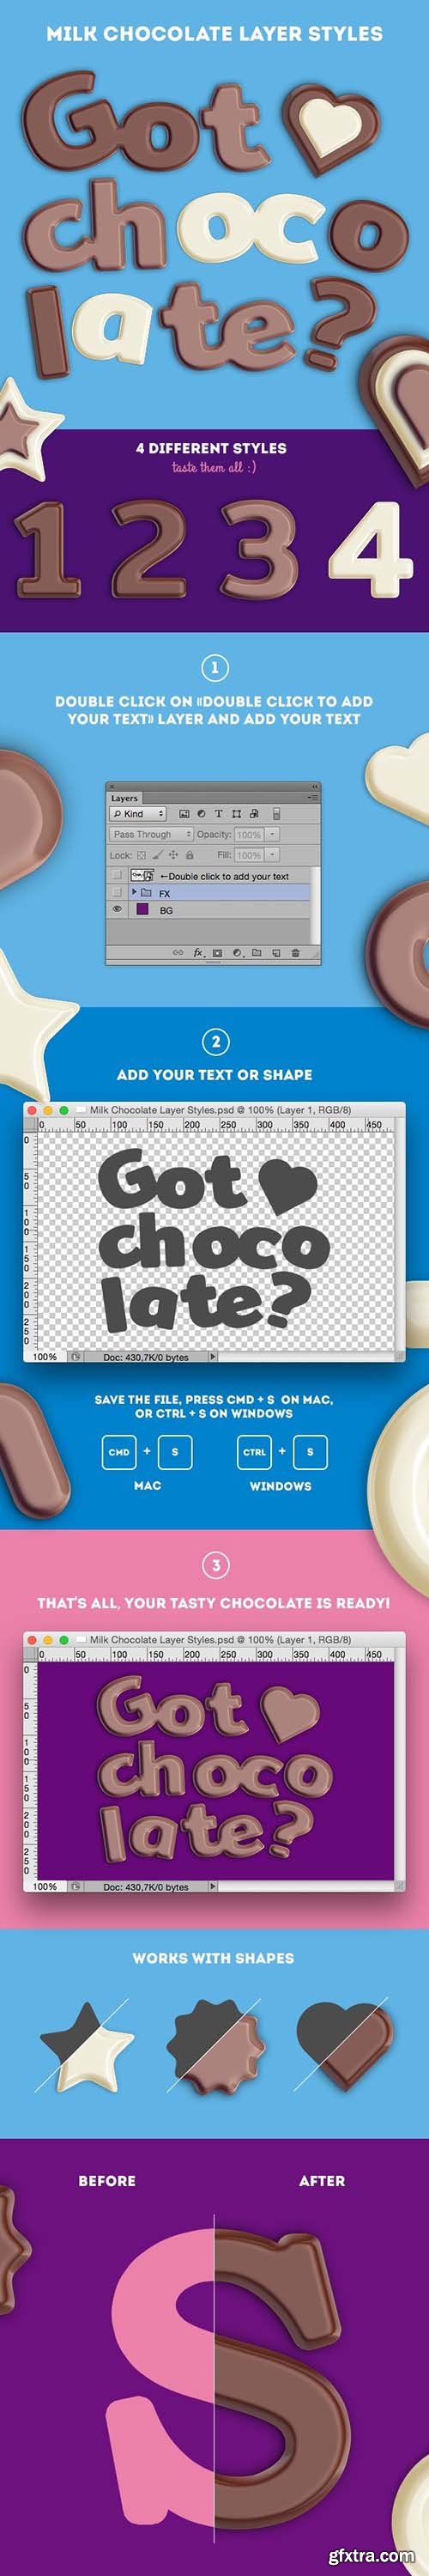 GraphicRiver - Milk Chocolate Layer Styles 45384922